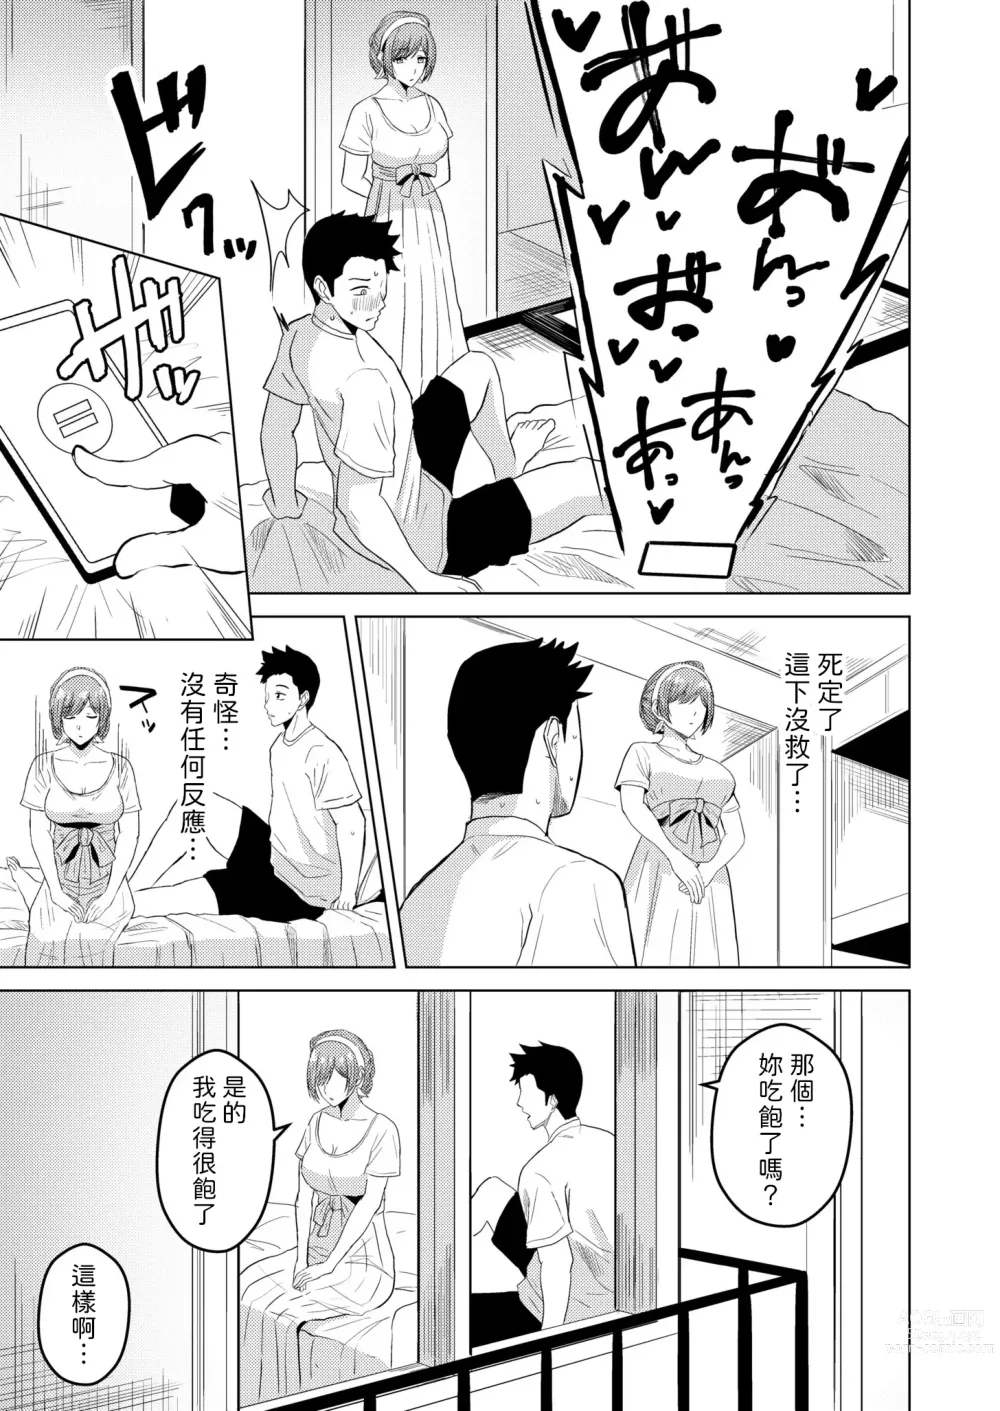 Page 5 of manga Natsue